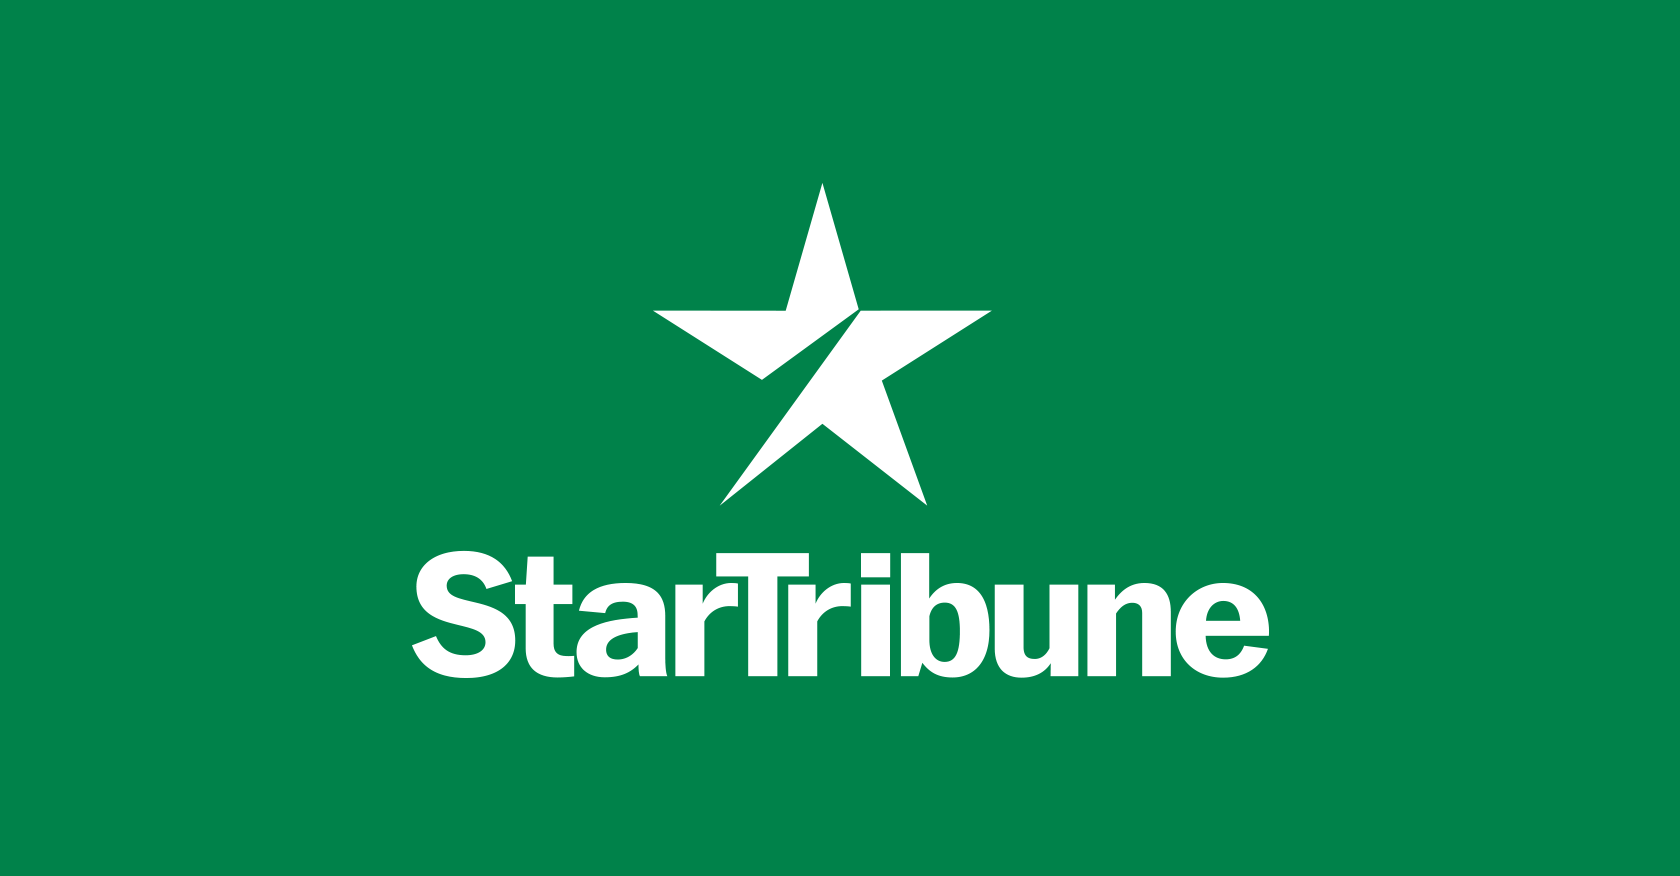 Star Tribune 50: The data